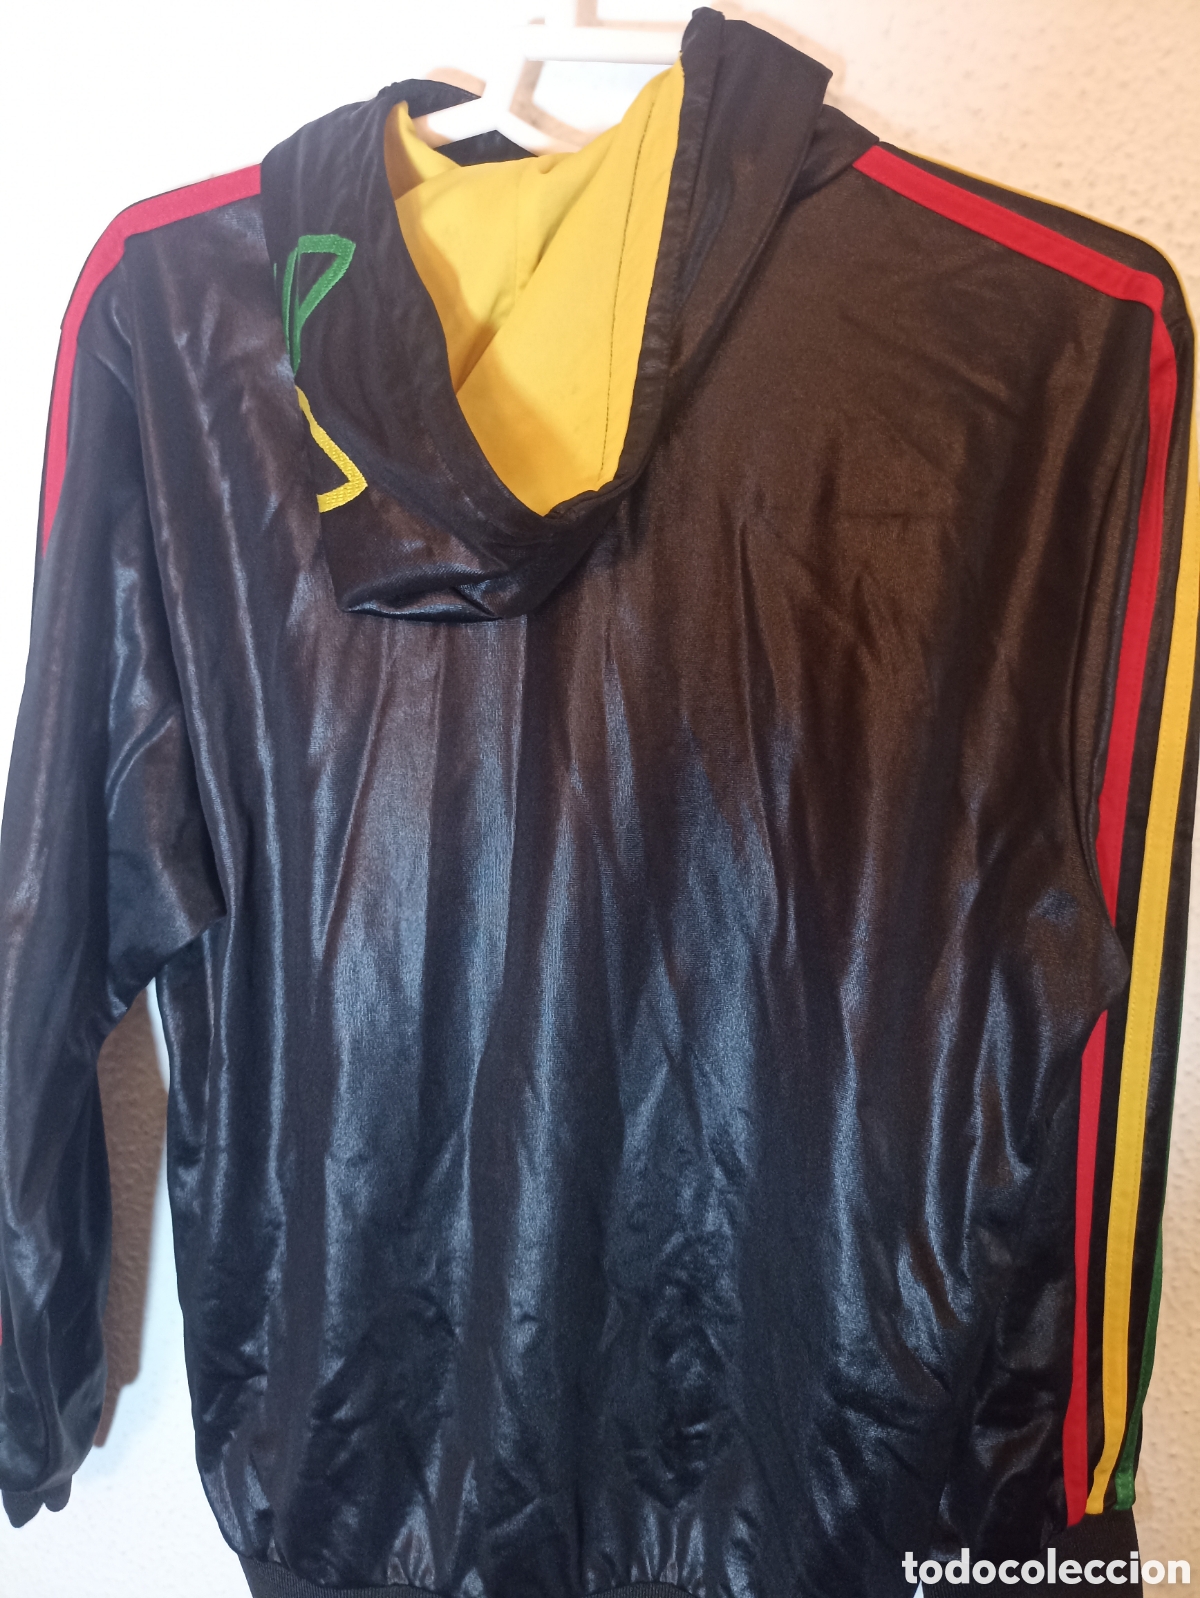 adidas jacket chaqueta jamaica rasta choni regg - Buy Other sport todocoleccion